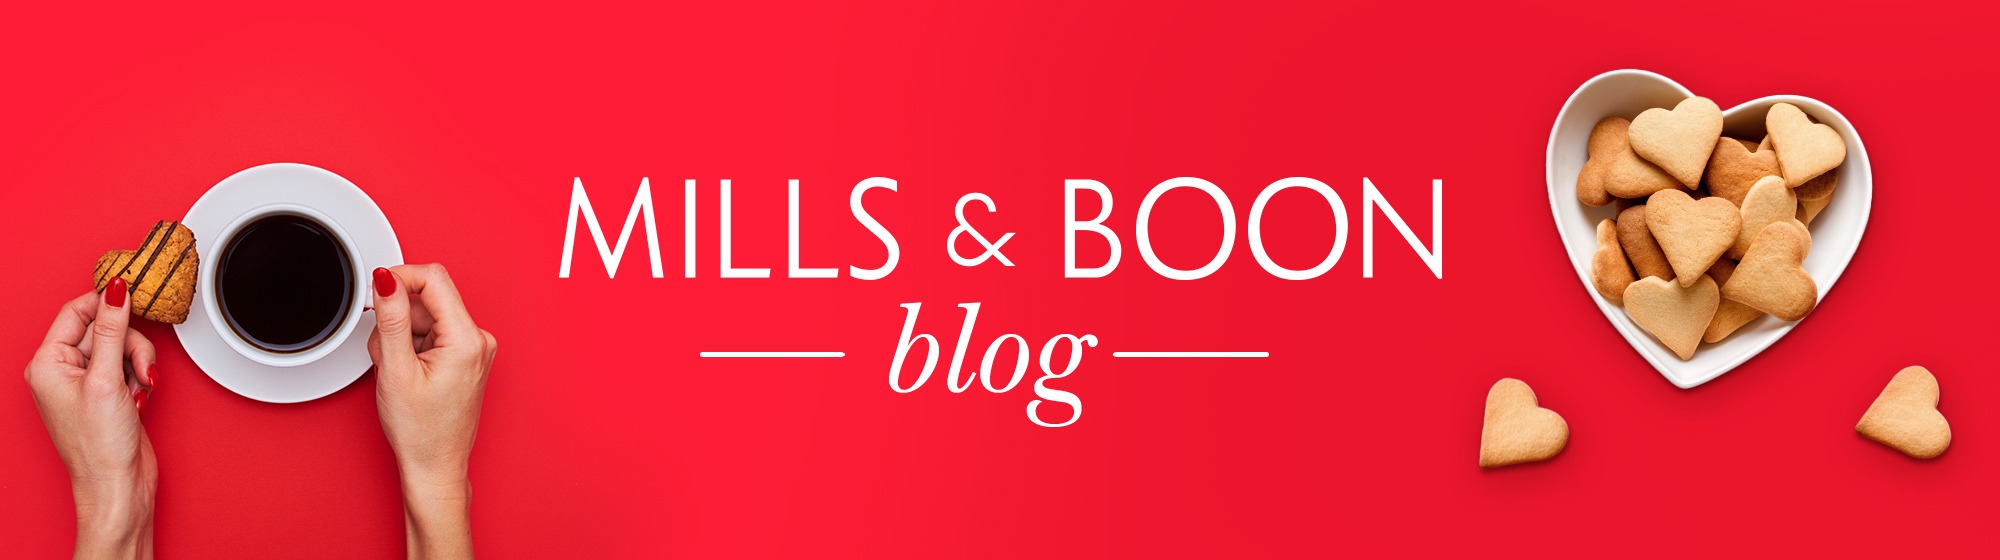 Mills & Boon Blog